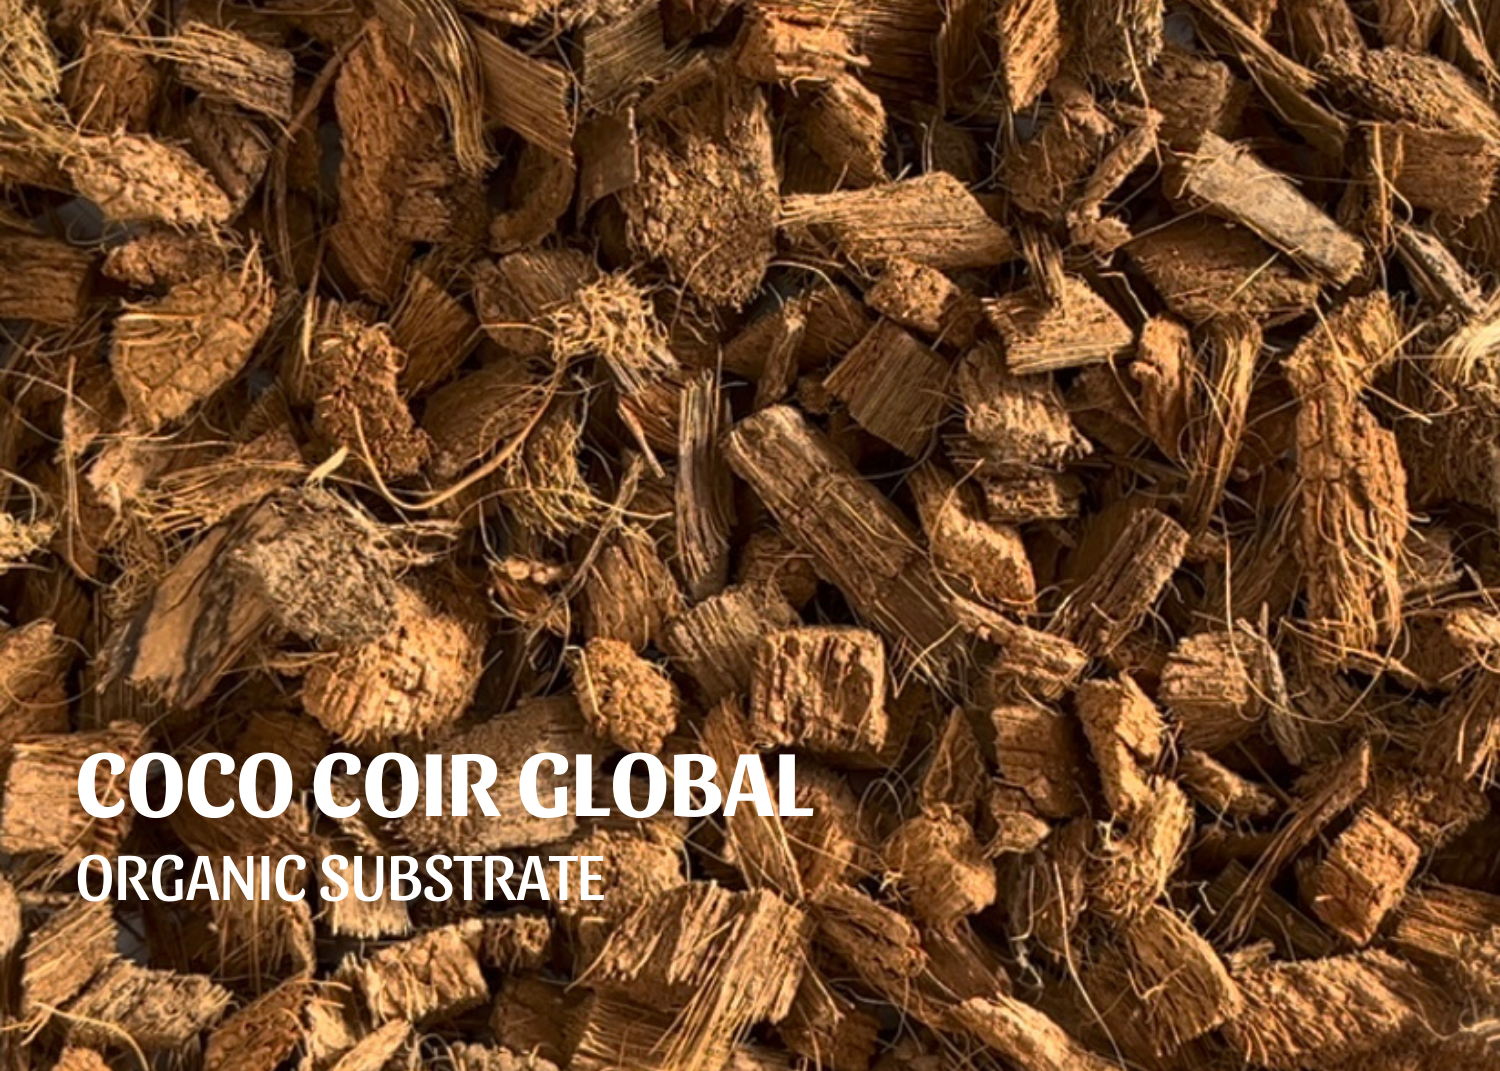 coco-coir-products-coco-coir-global